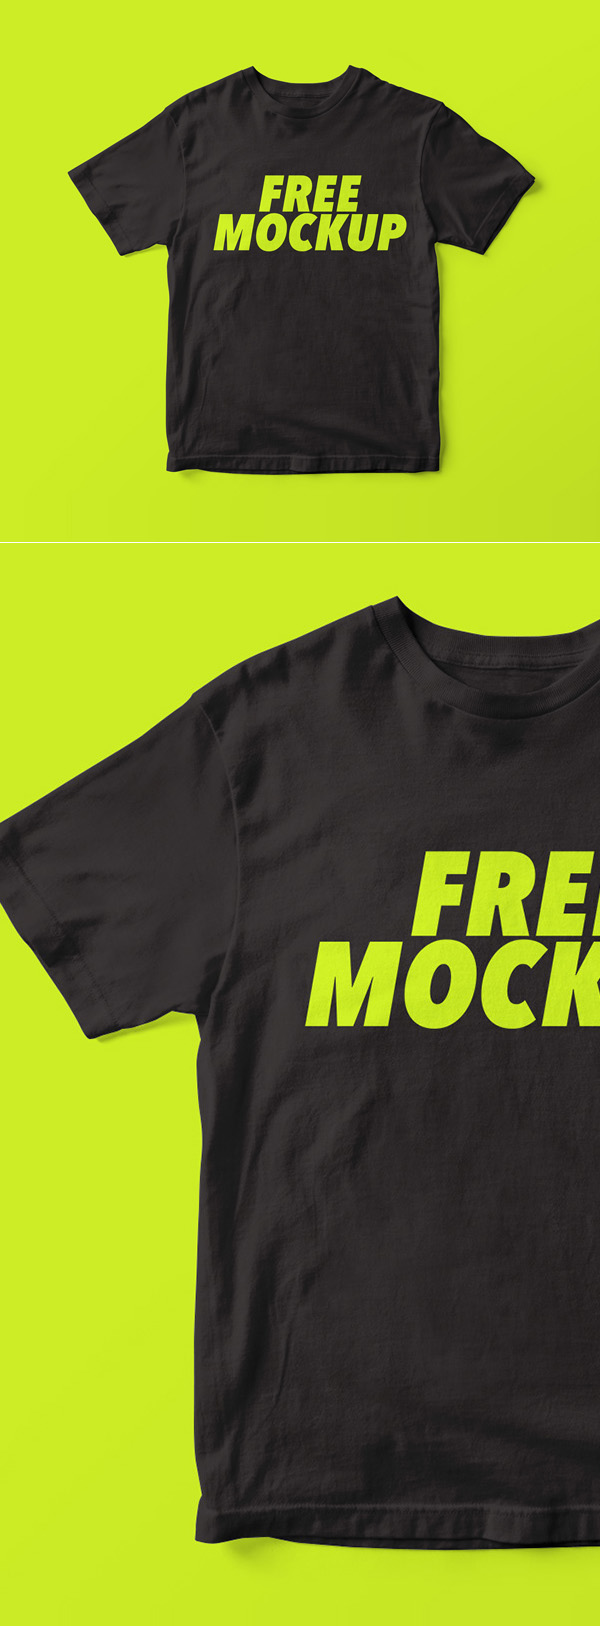 Free Realistic T-Shirt Mockup PSD Template